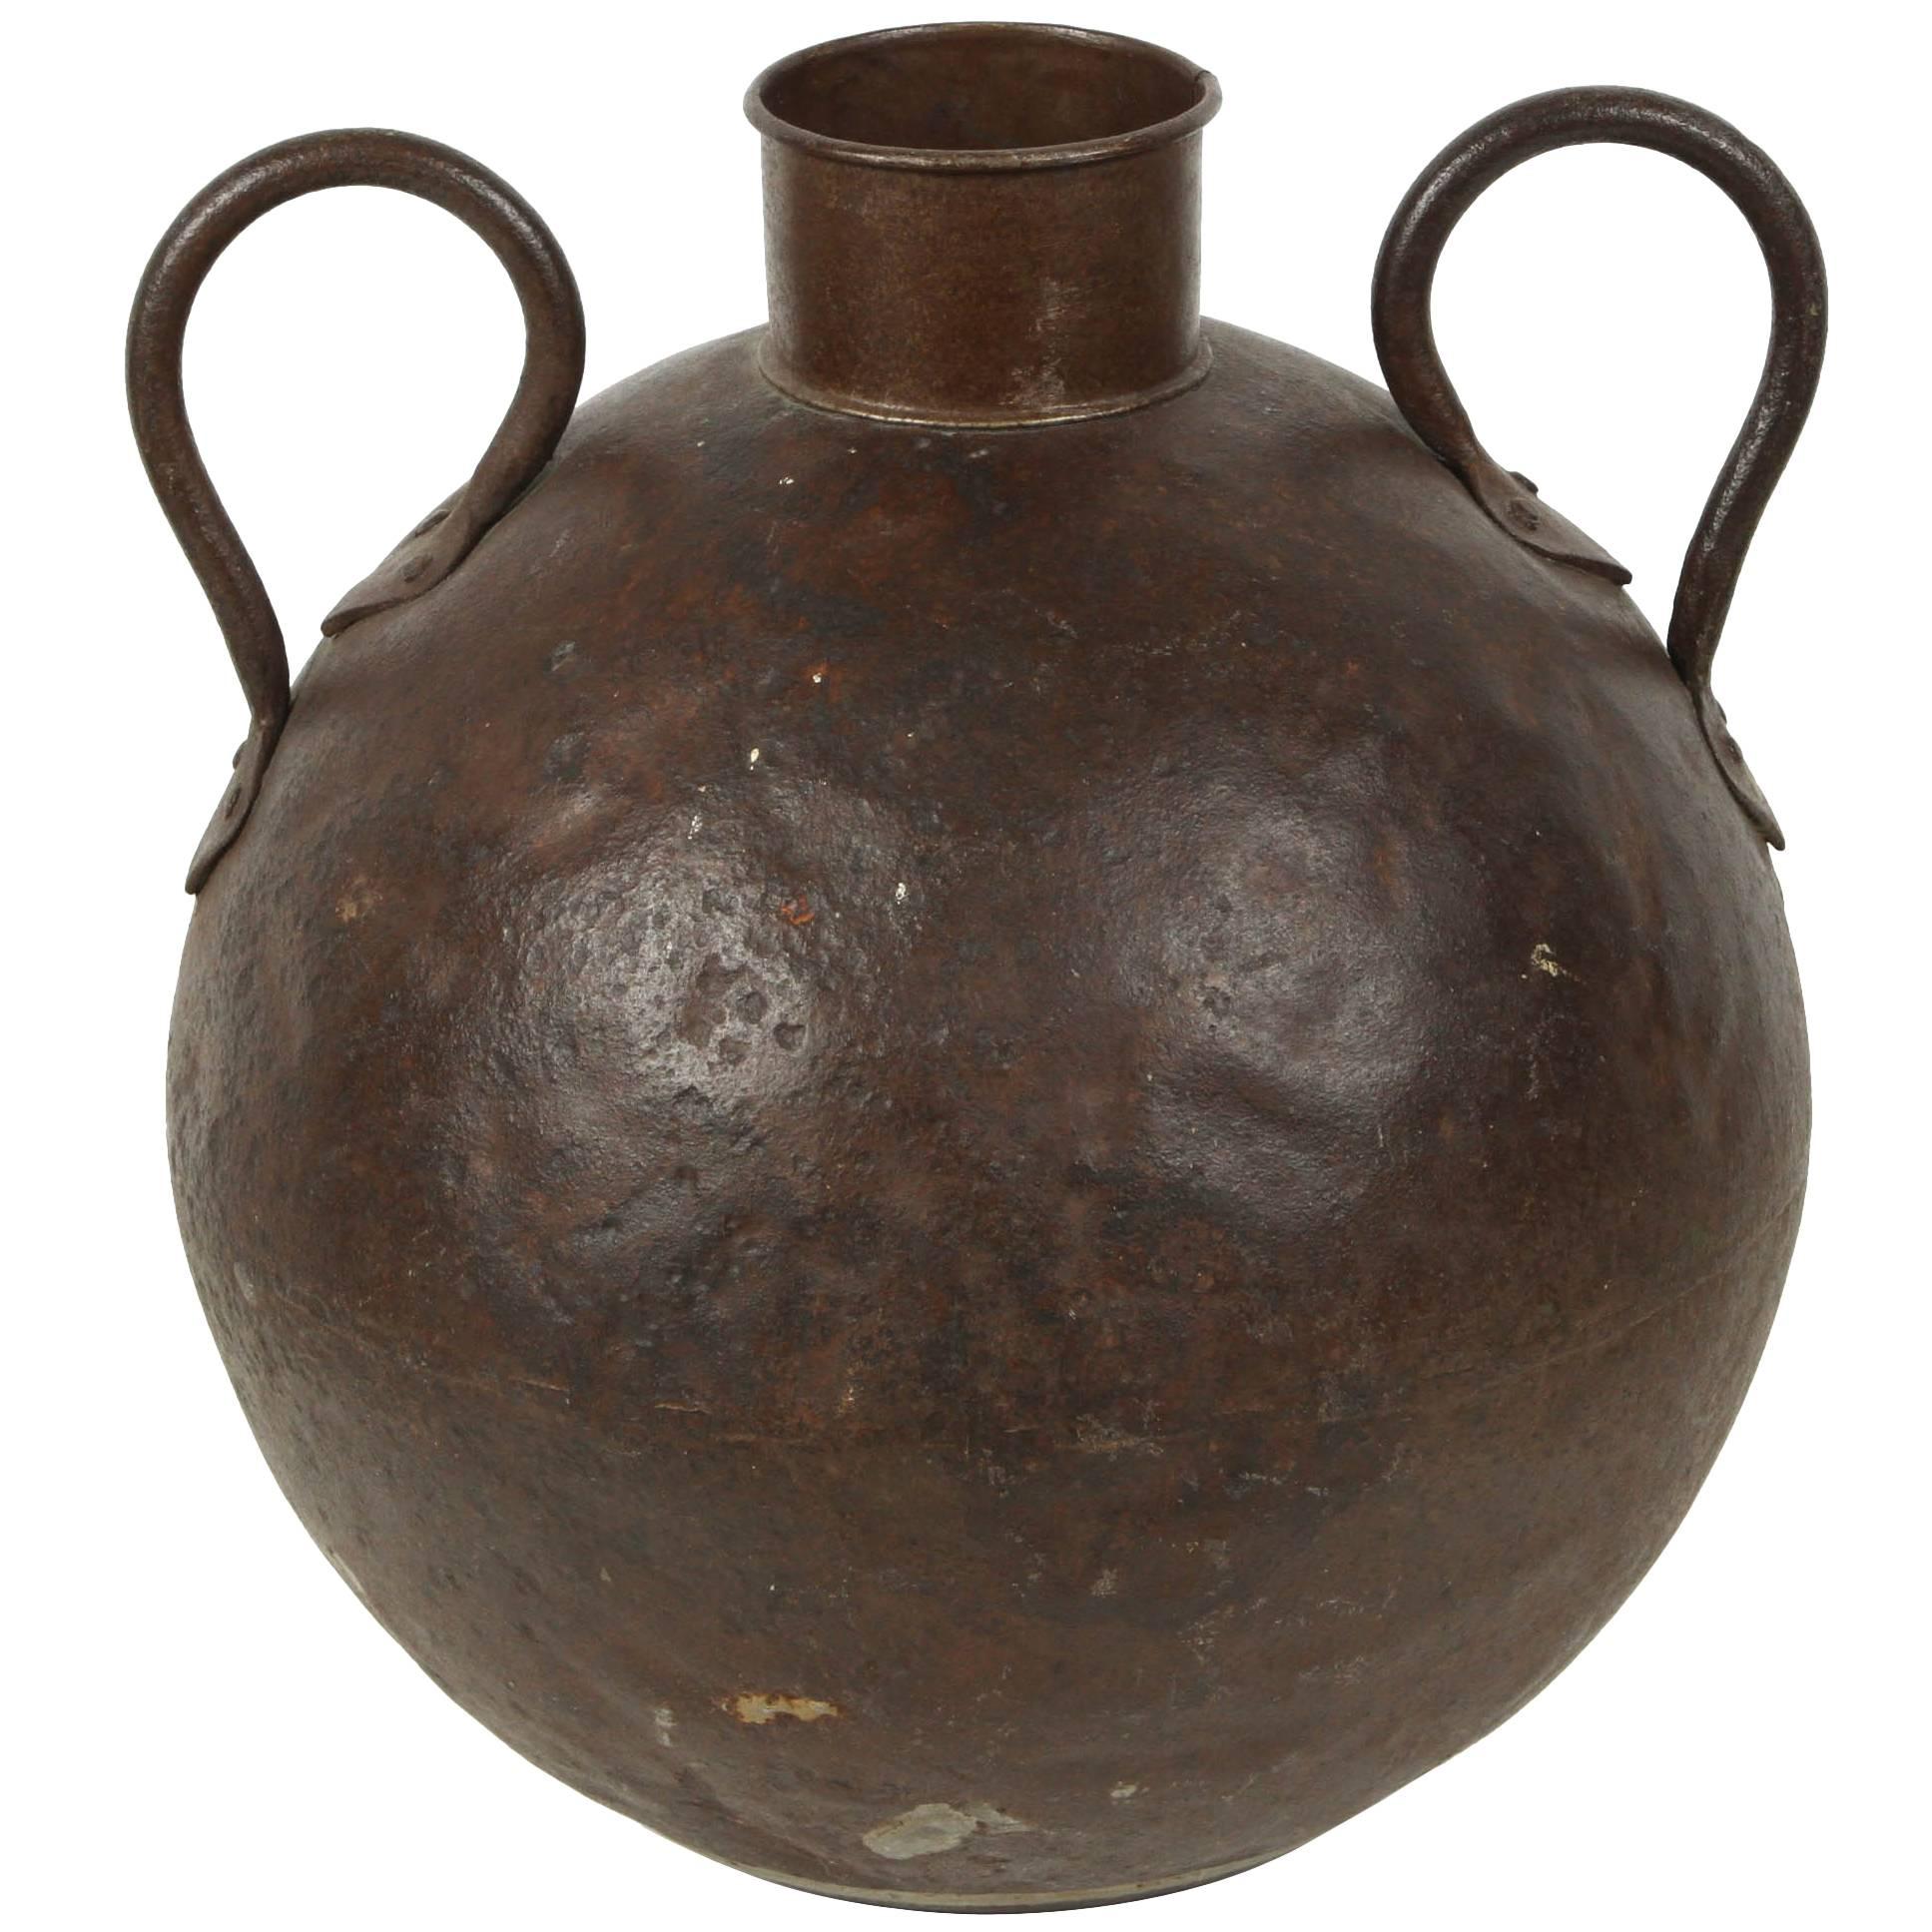 Antique Metal Water Jar with Handles